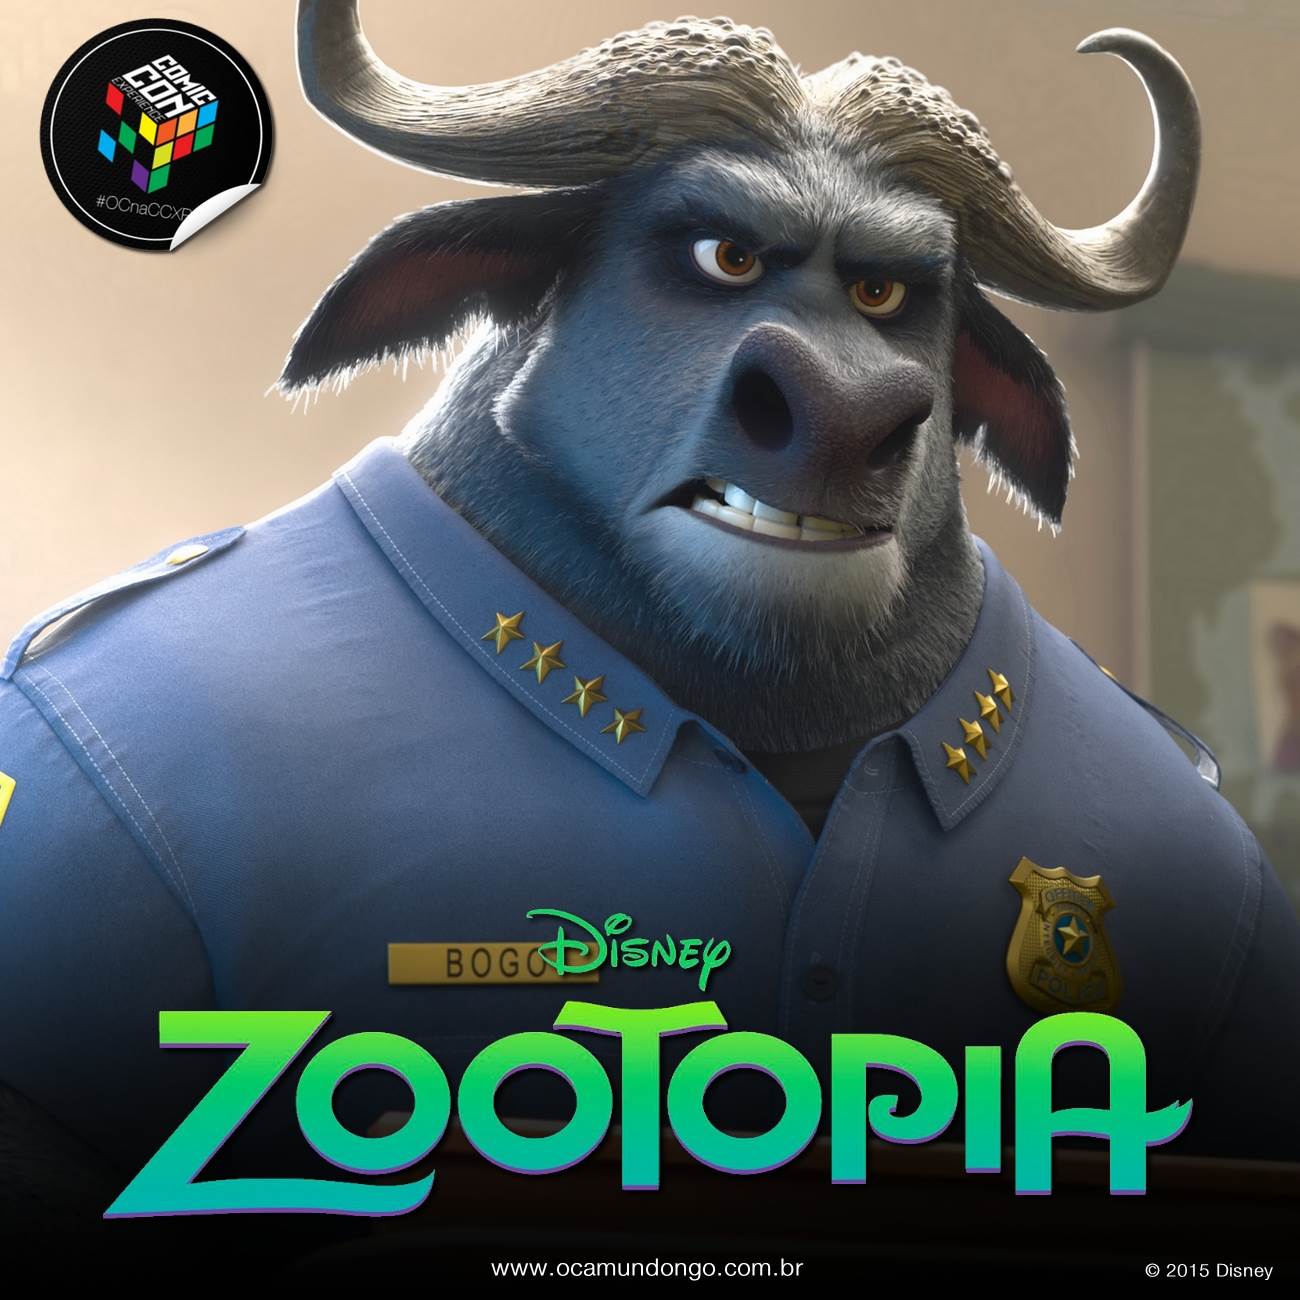 zootopia-inicio-bogo-camundongo